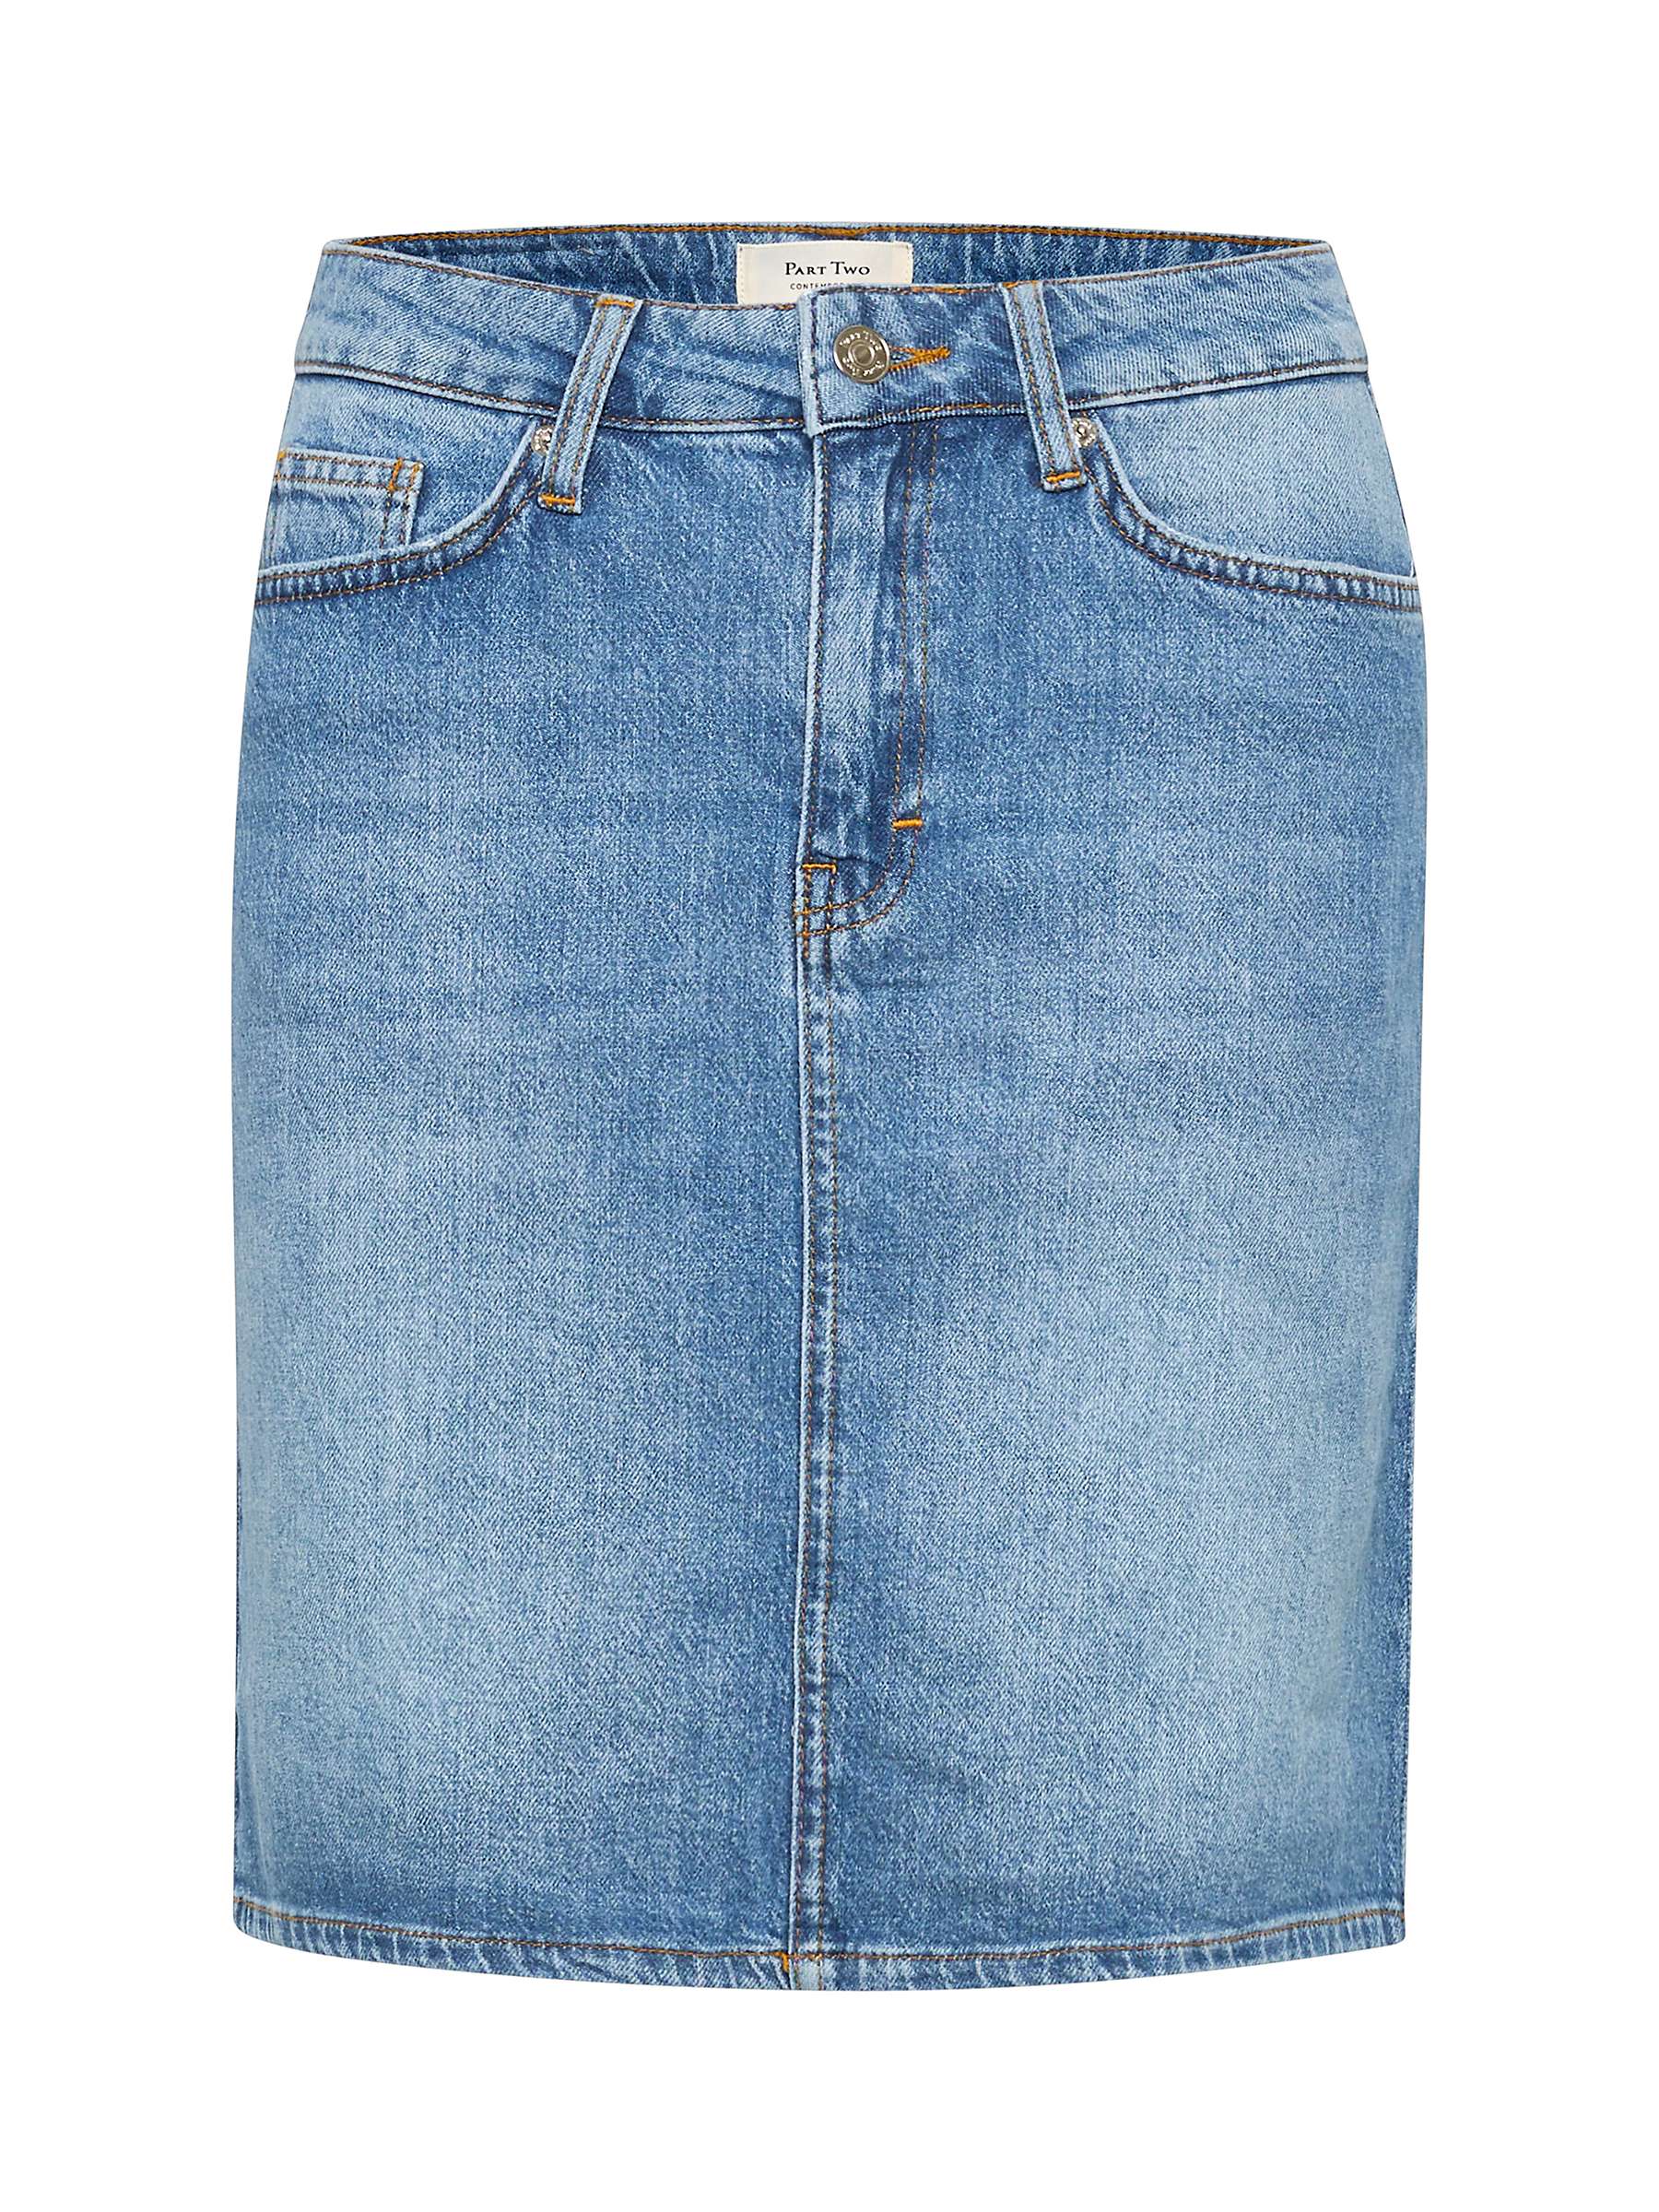 Buy Part Two Olena Cotton Blend Denim Mini Skirt, Light Blue Denim Online at johnlewis.com